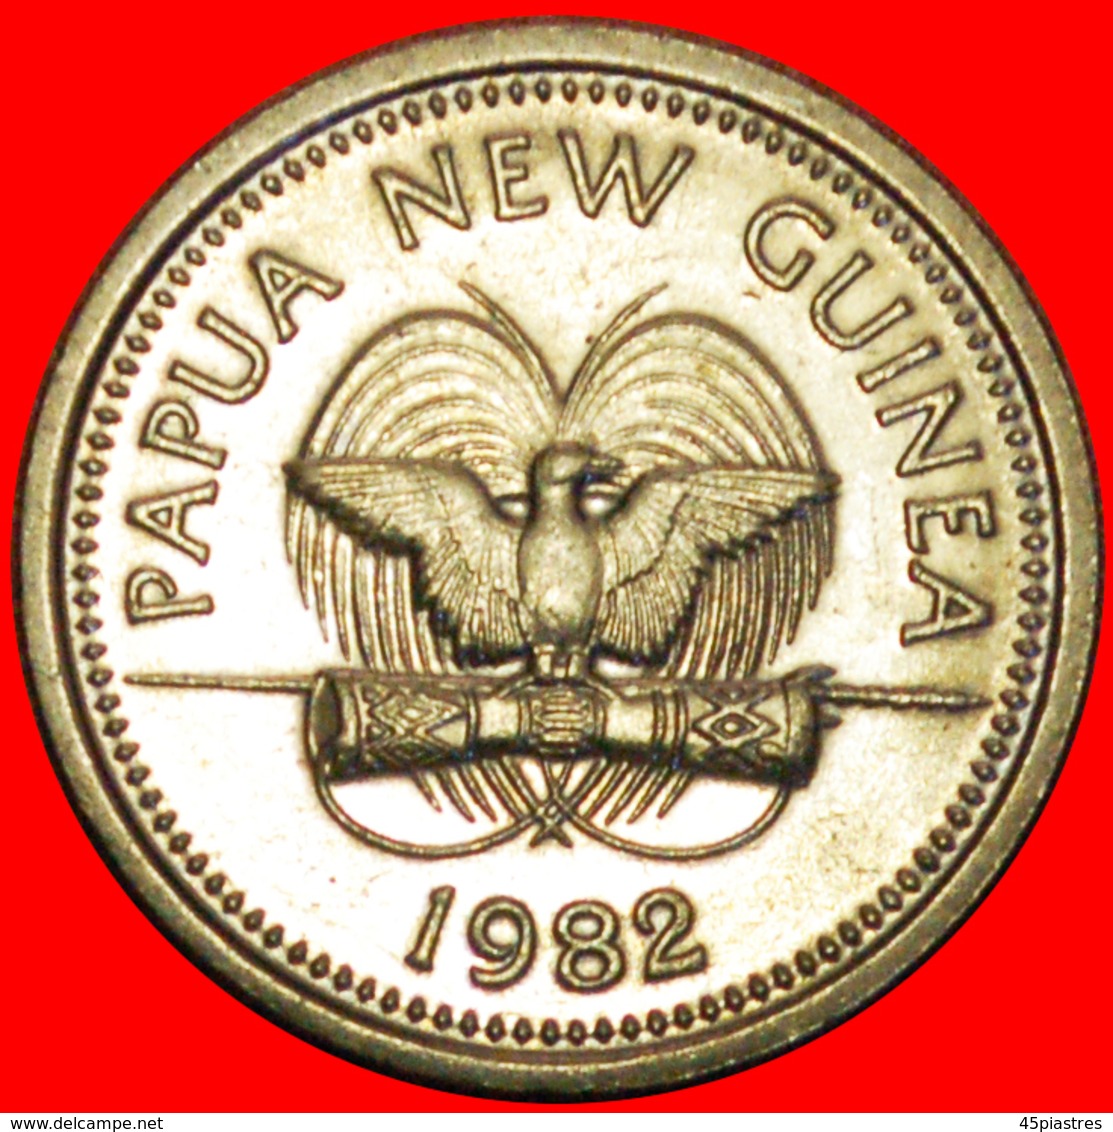 + GREAT BRITAIN TURTLE: PAPUA NEW GUINEA ★ 5 TOEA 1982 MINT LUSTER! LOW START ★ NO RESERVE! - Papúa Nueva Guinea